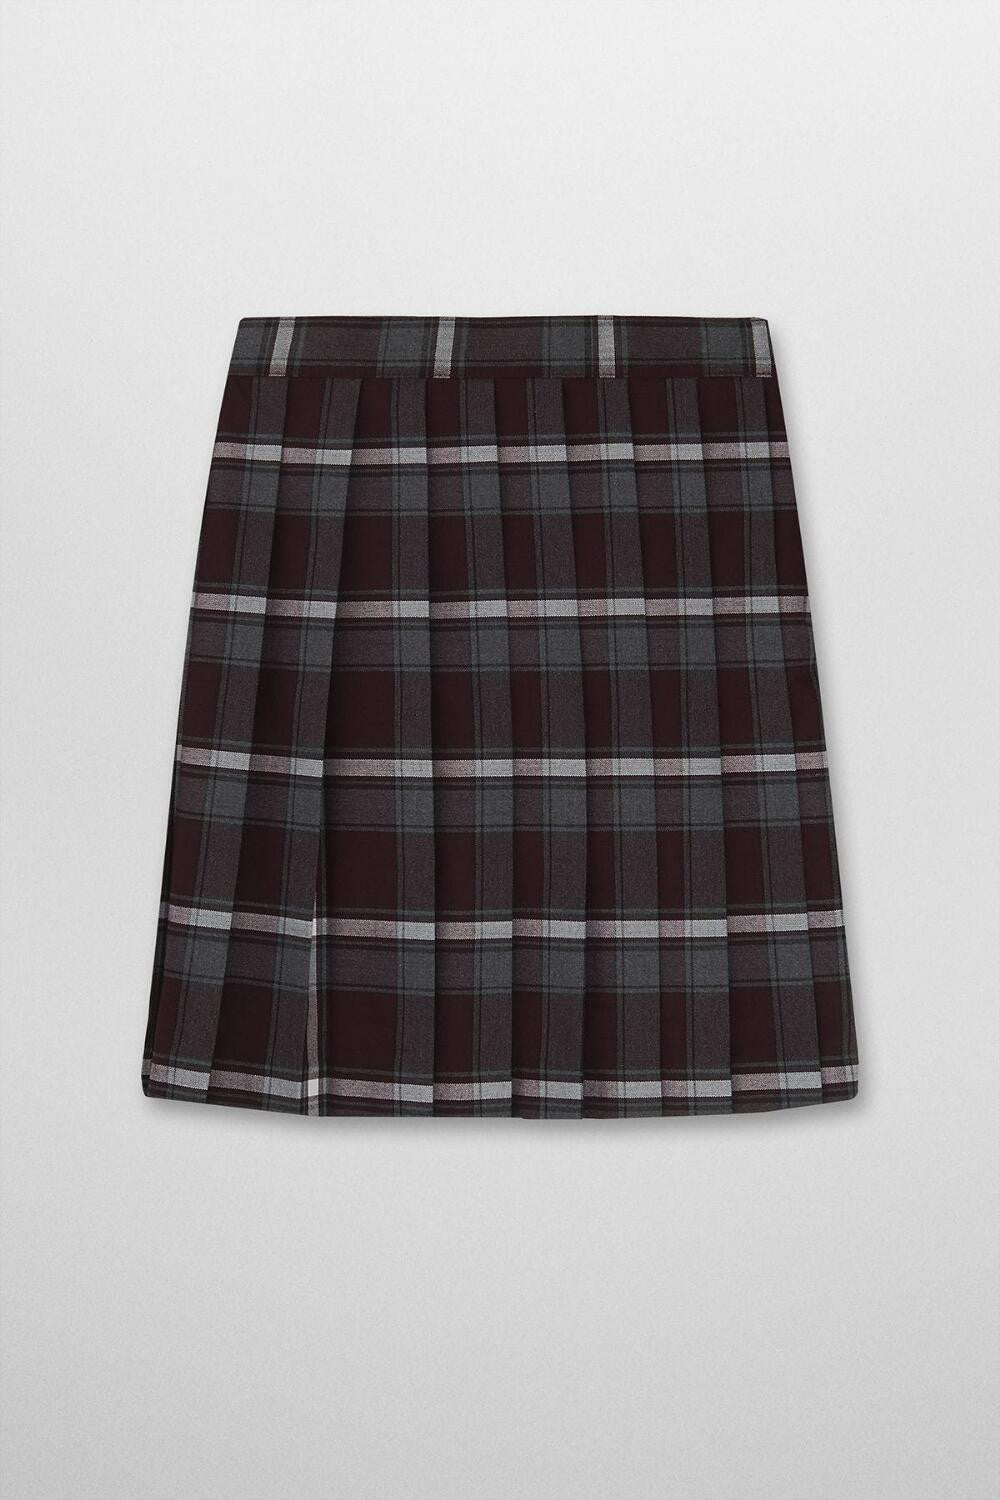 Plaid Skirt FT-1373 - Growing Kids